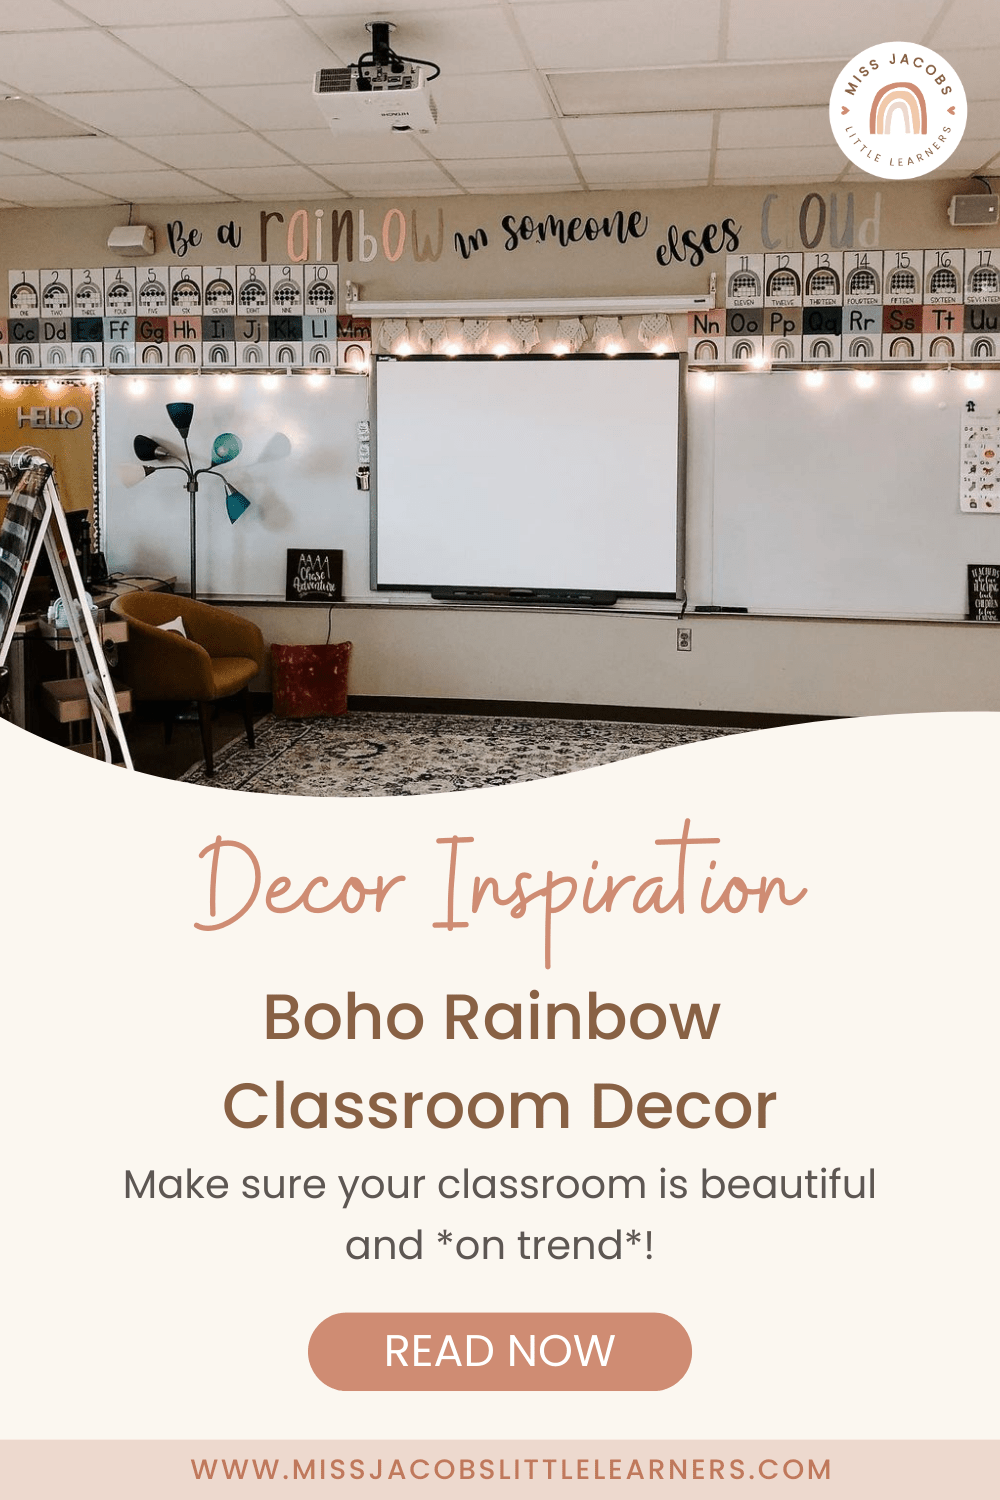 Boho Rainbow Classroom Decor Miss Jacobs Little Learners